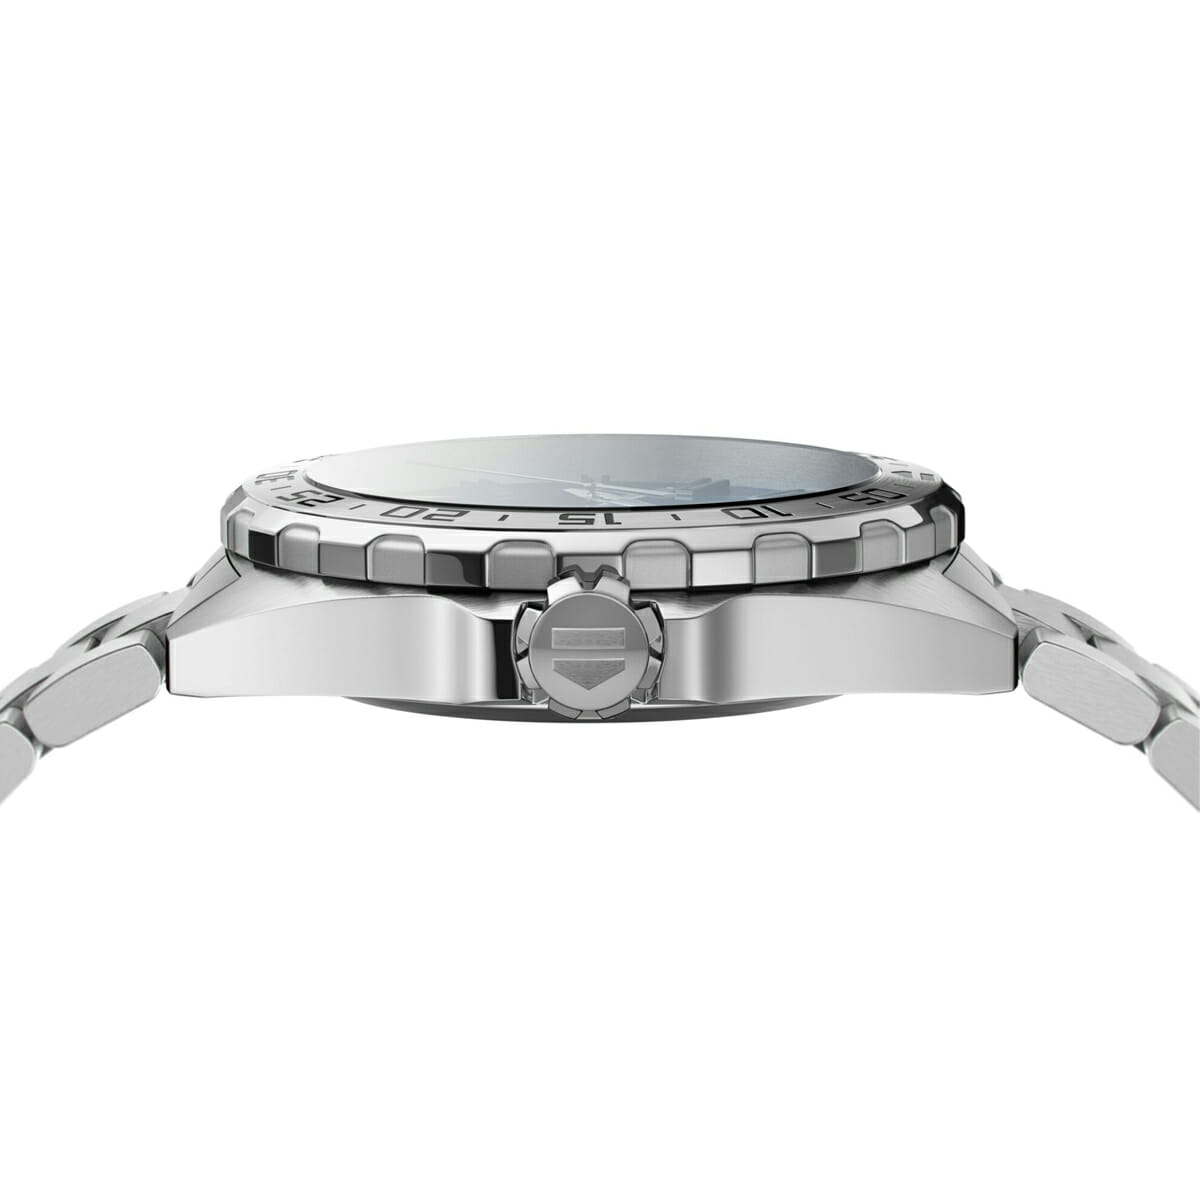 Formula 1 41mm Steel Quartz Watch